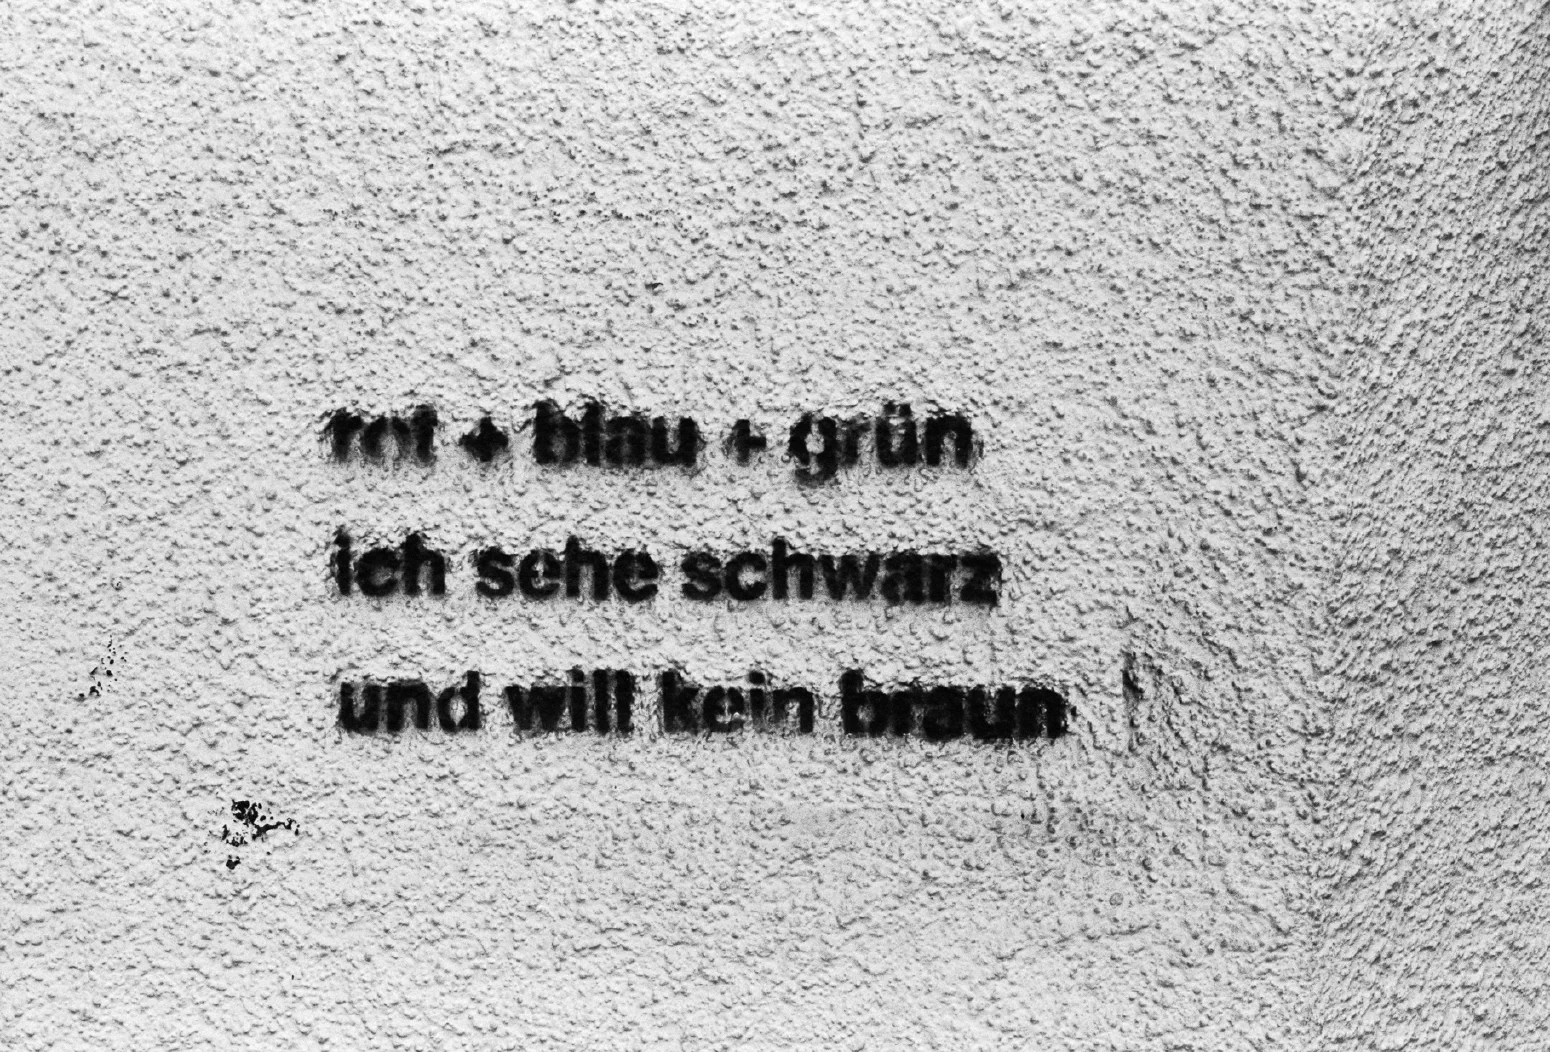 19980501#27. Helvetiaplatz, Zürich. 01.05.1998